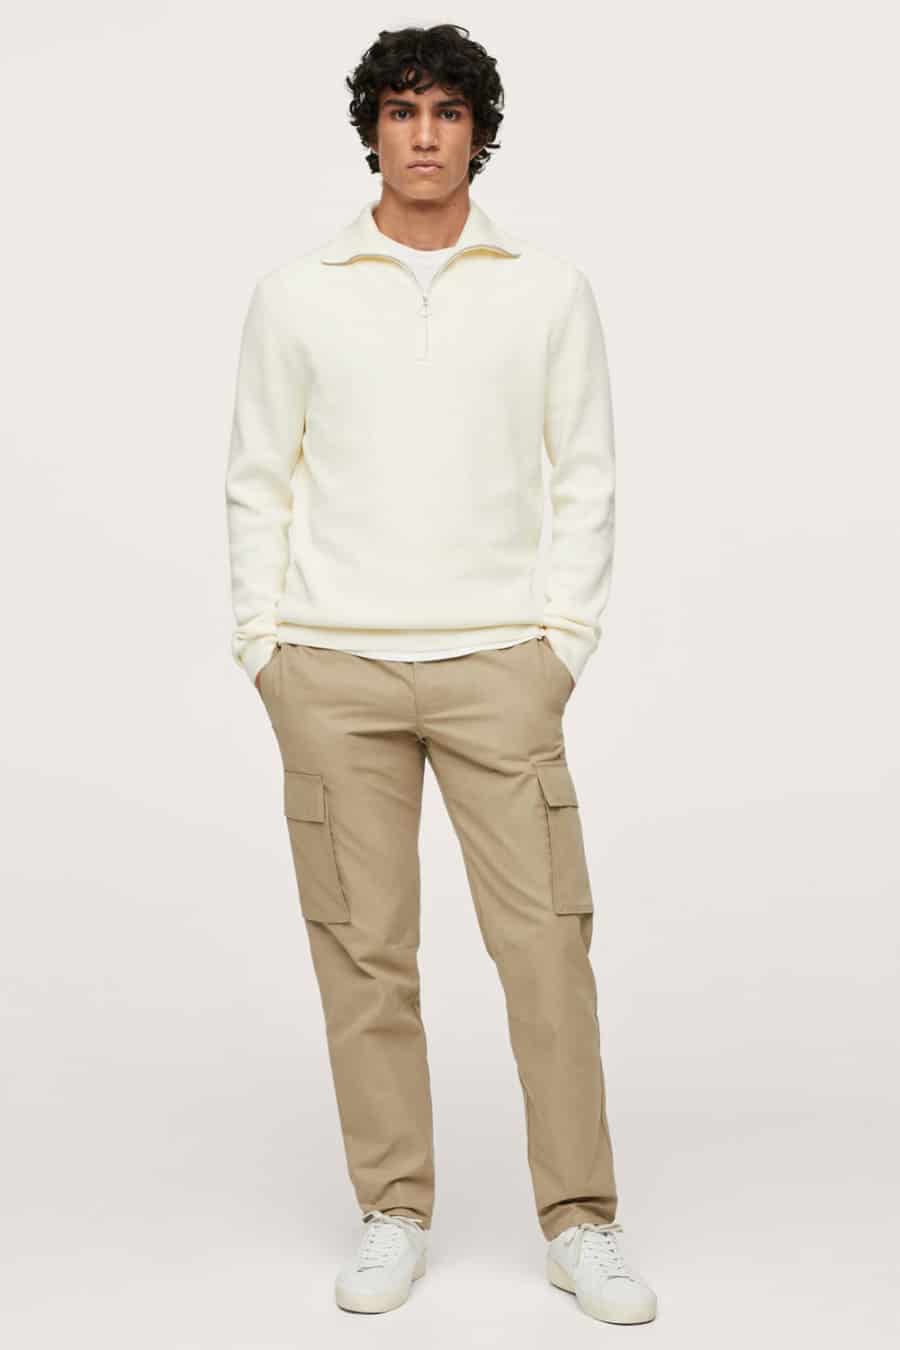 Men's khaki cargo pants, white T-shirt, white zip-neck sweater and white sneakers outfit